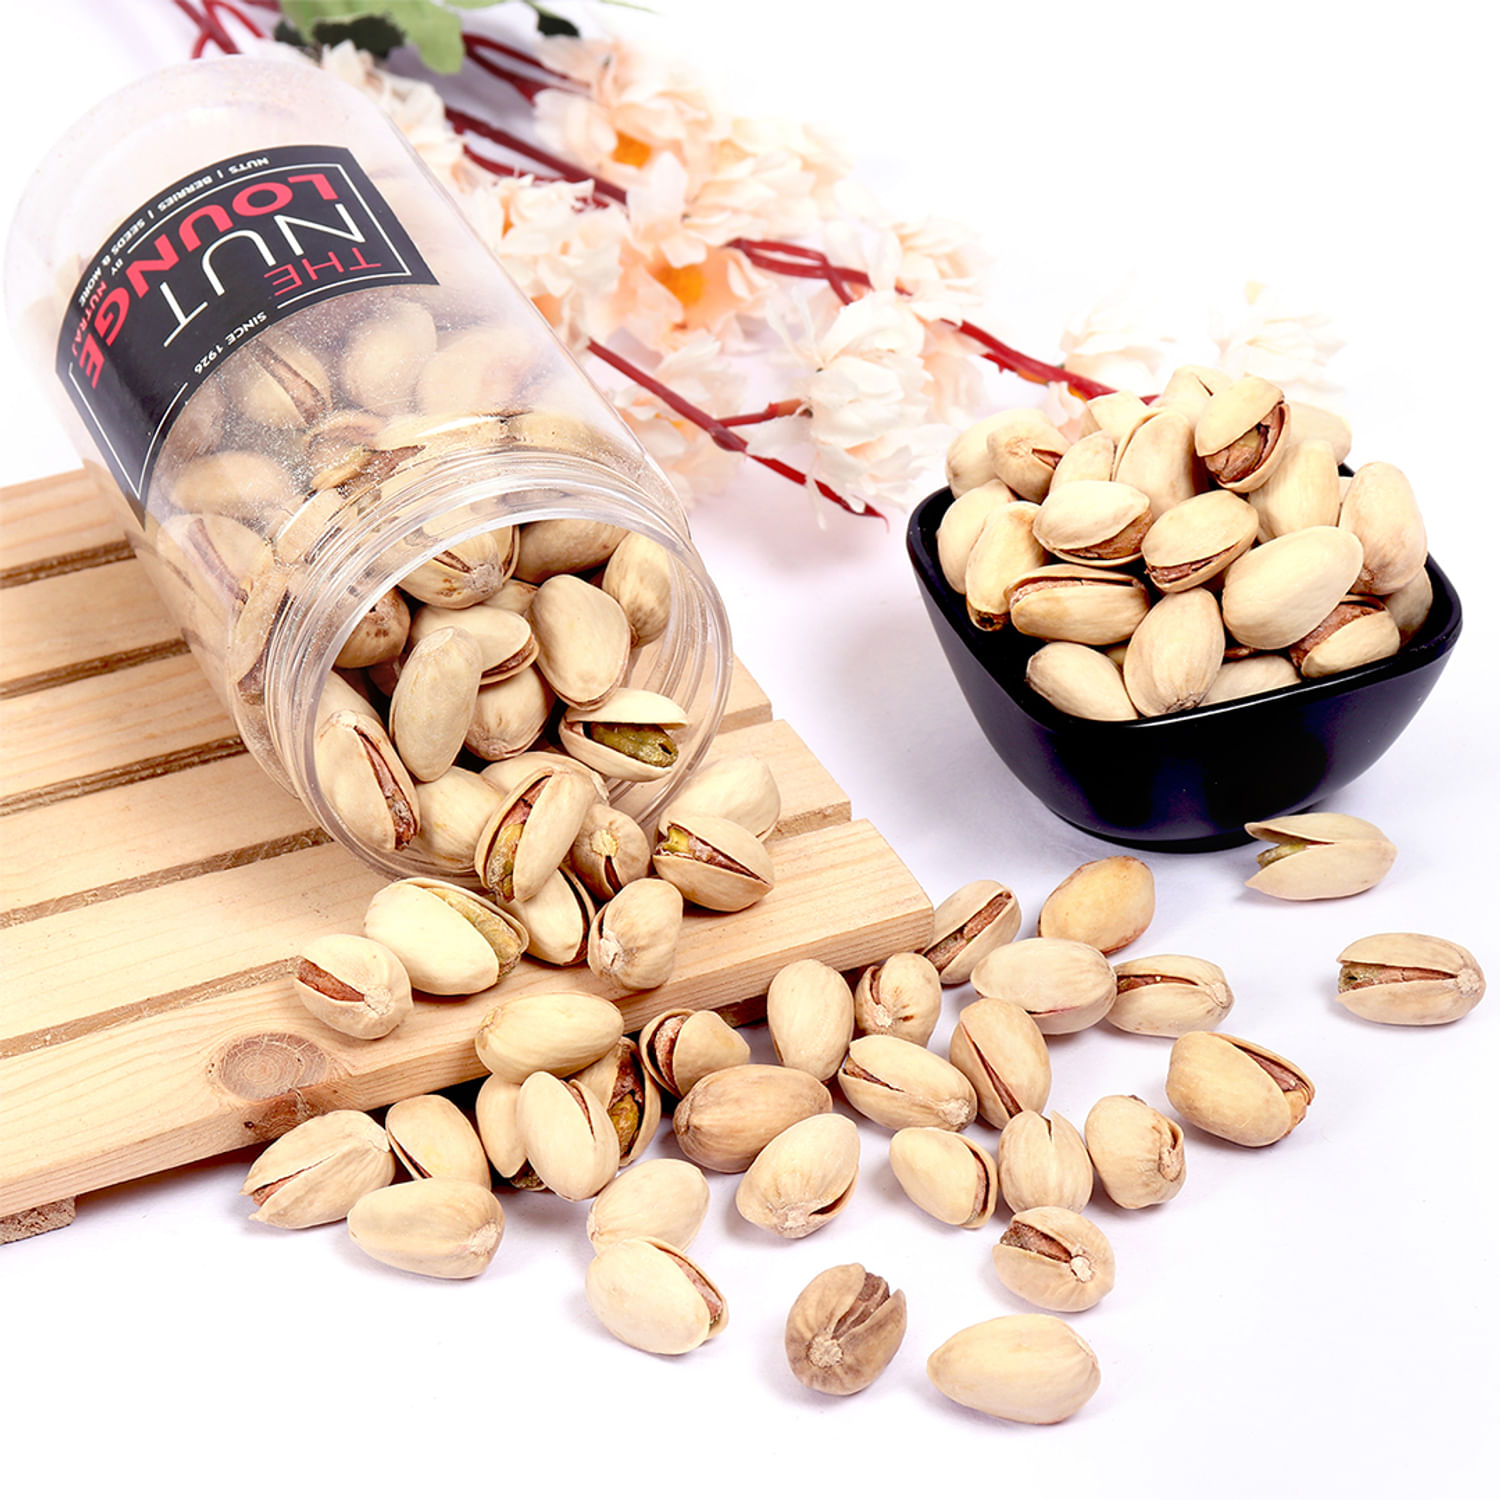 Nutty in Chocoland Diwali Gift Pack